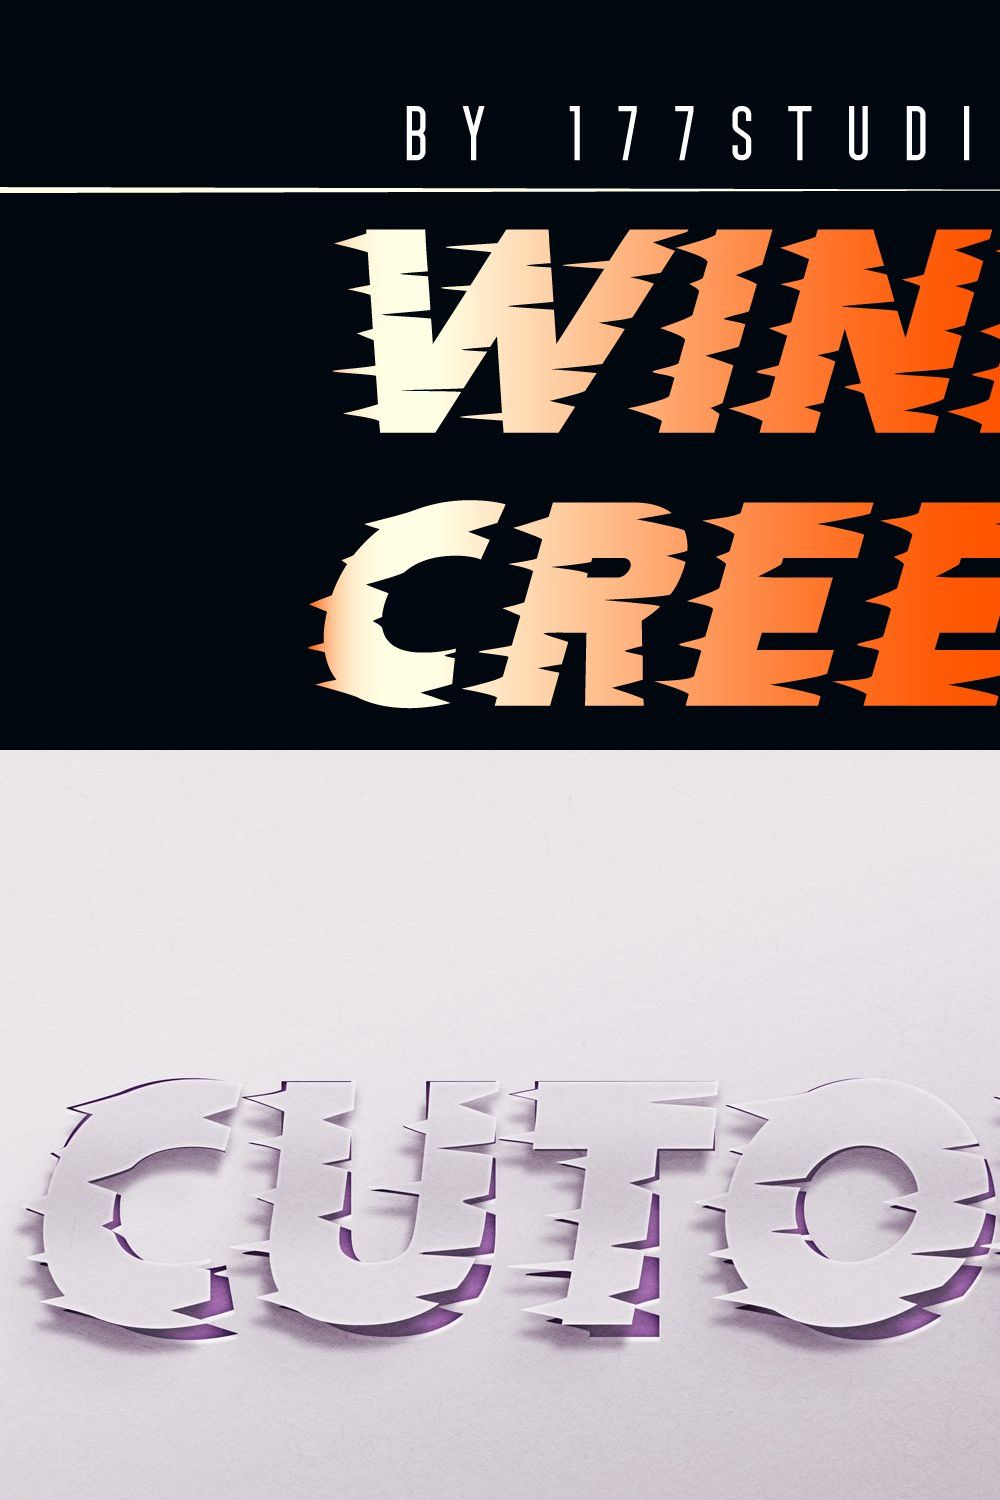 WIND CREEK Font pinterest preview image.